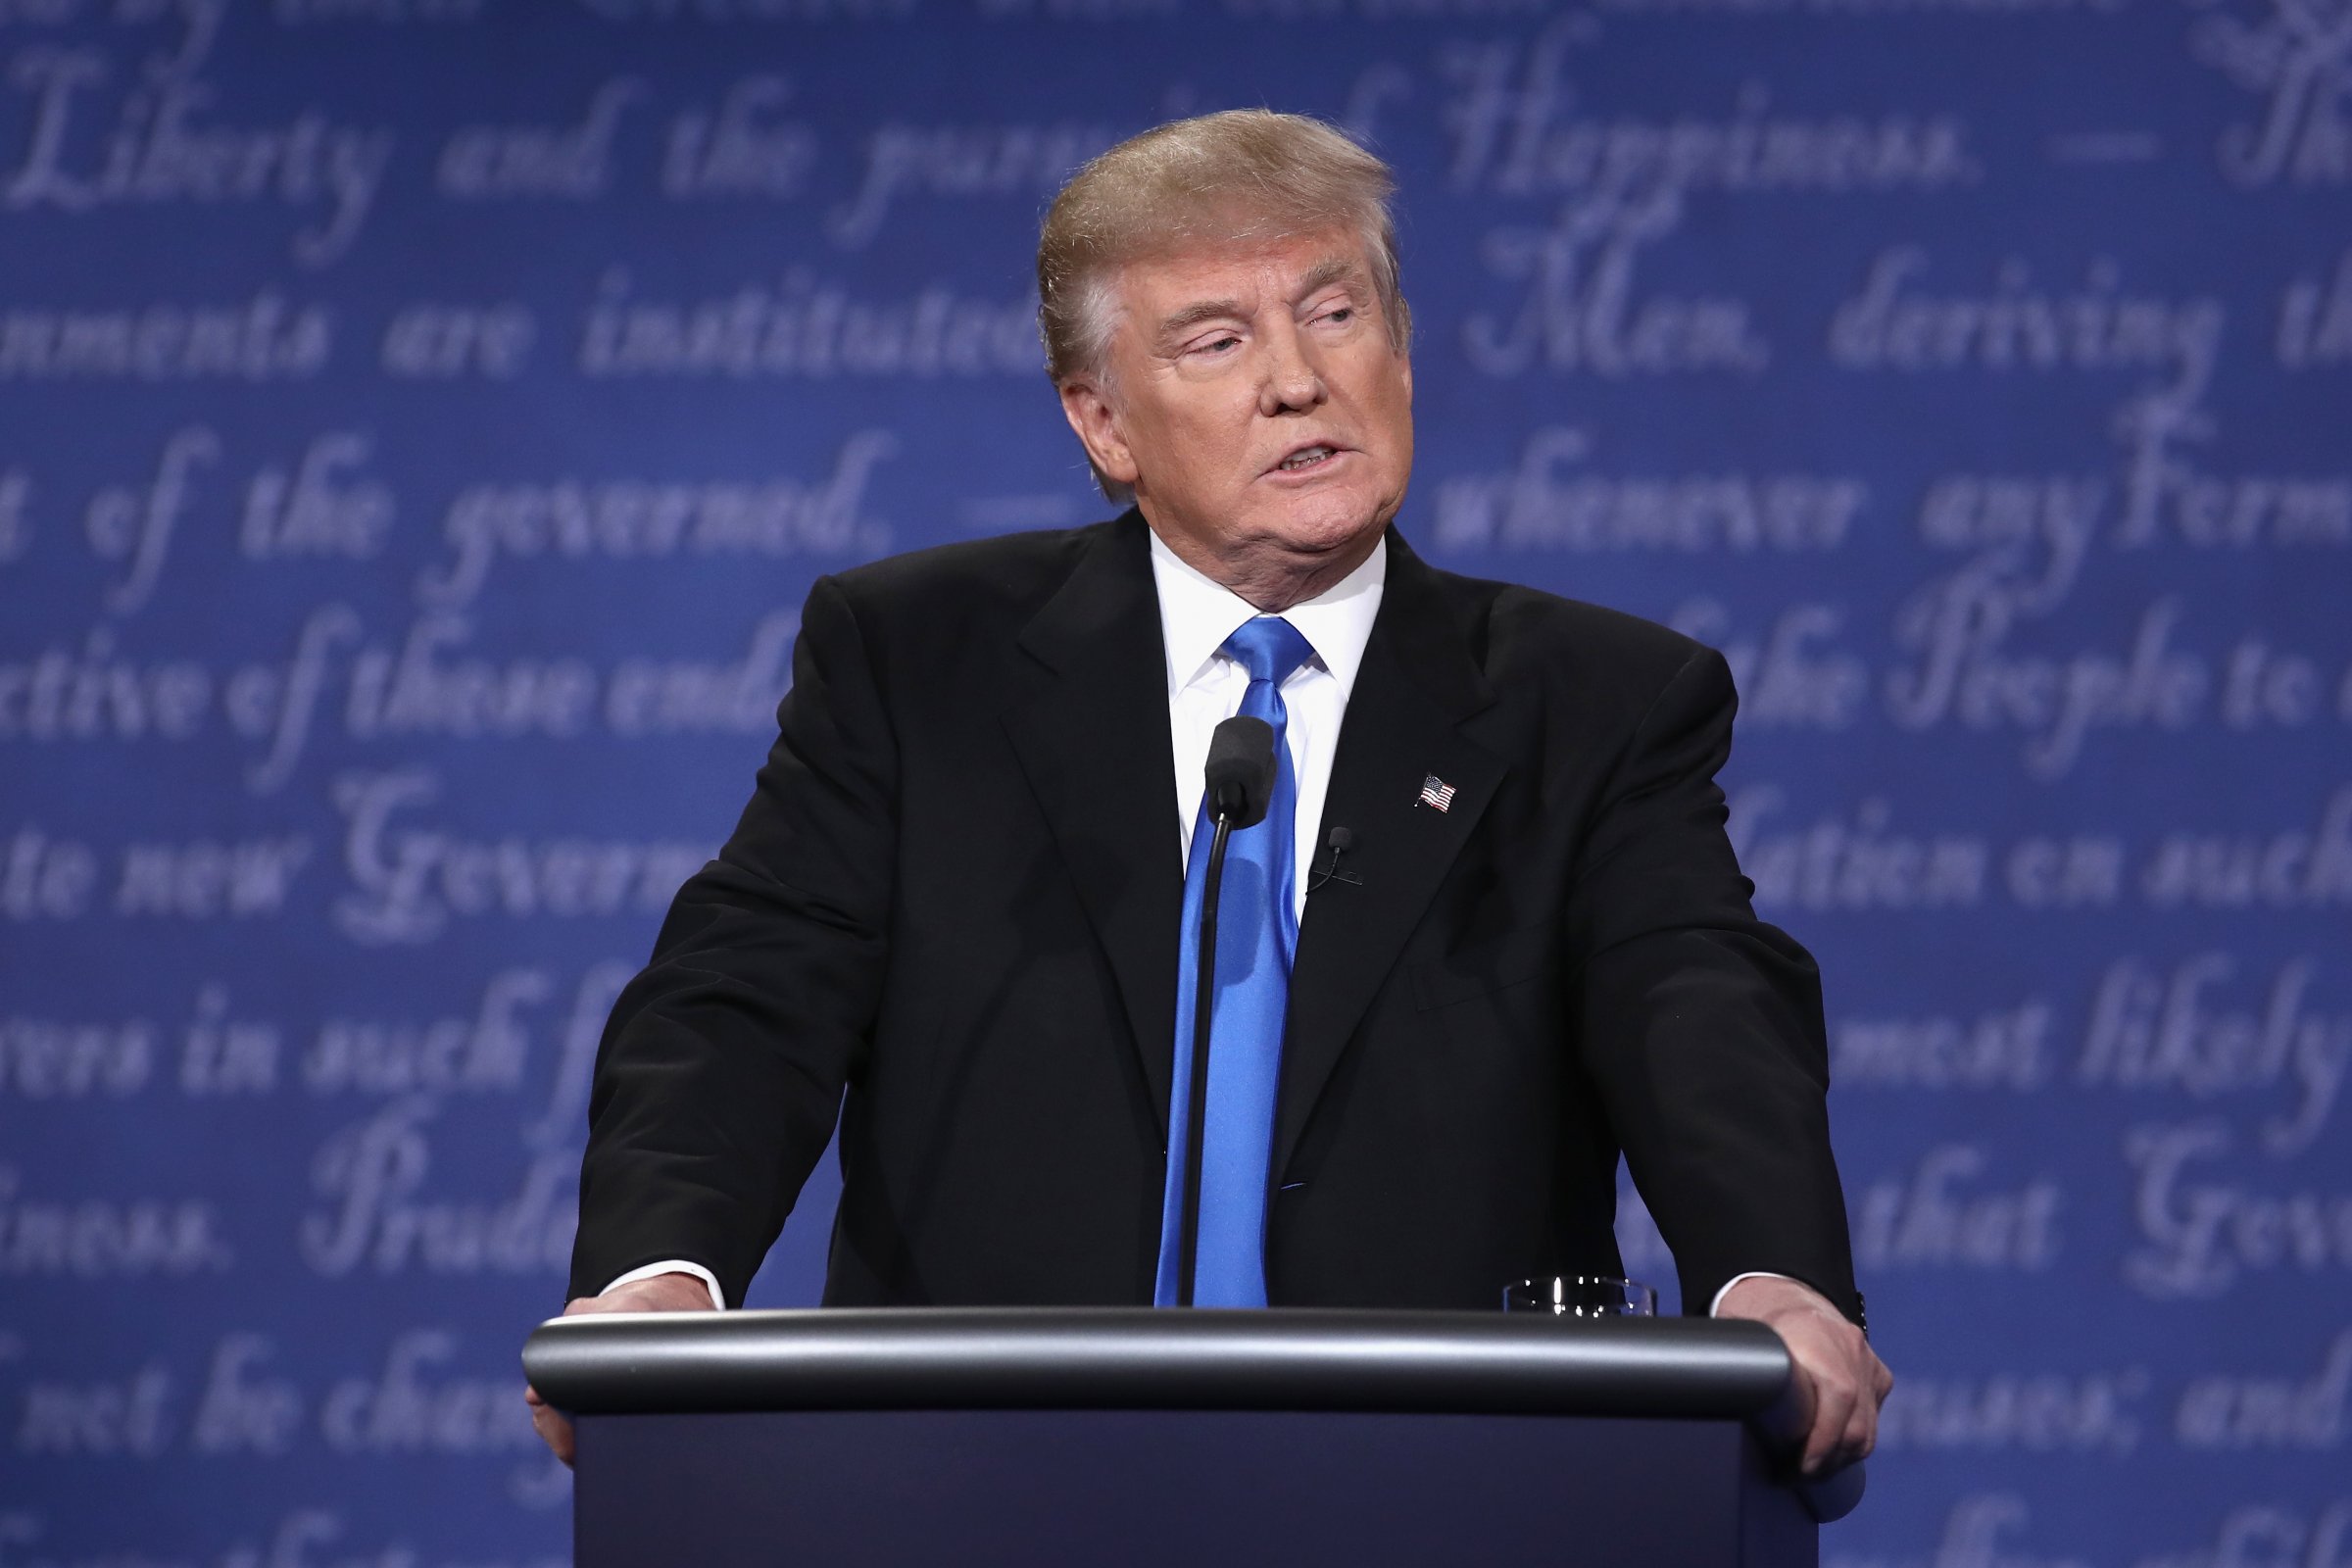  Trump asegura que atacará más a Clinton en próximo debate